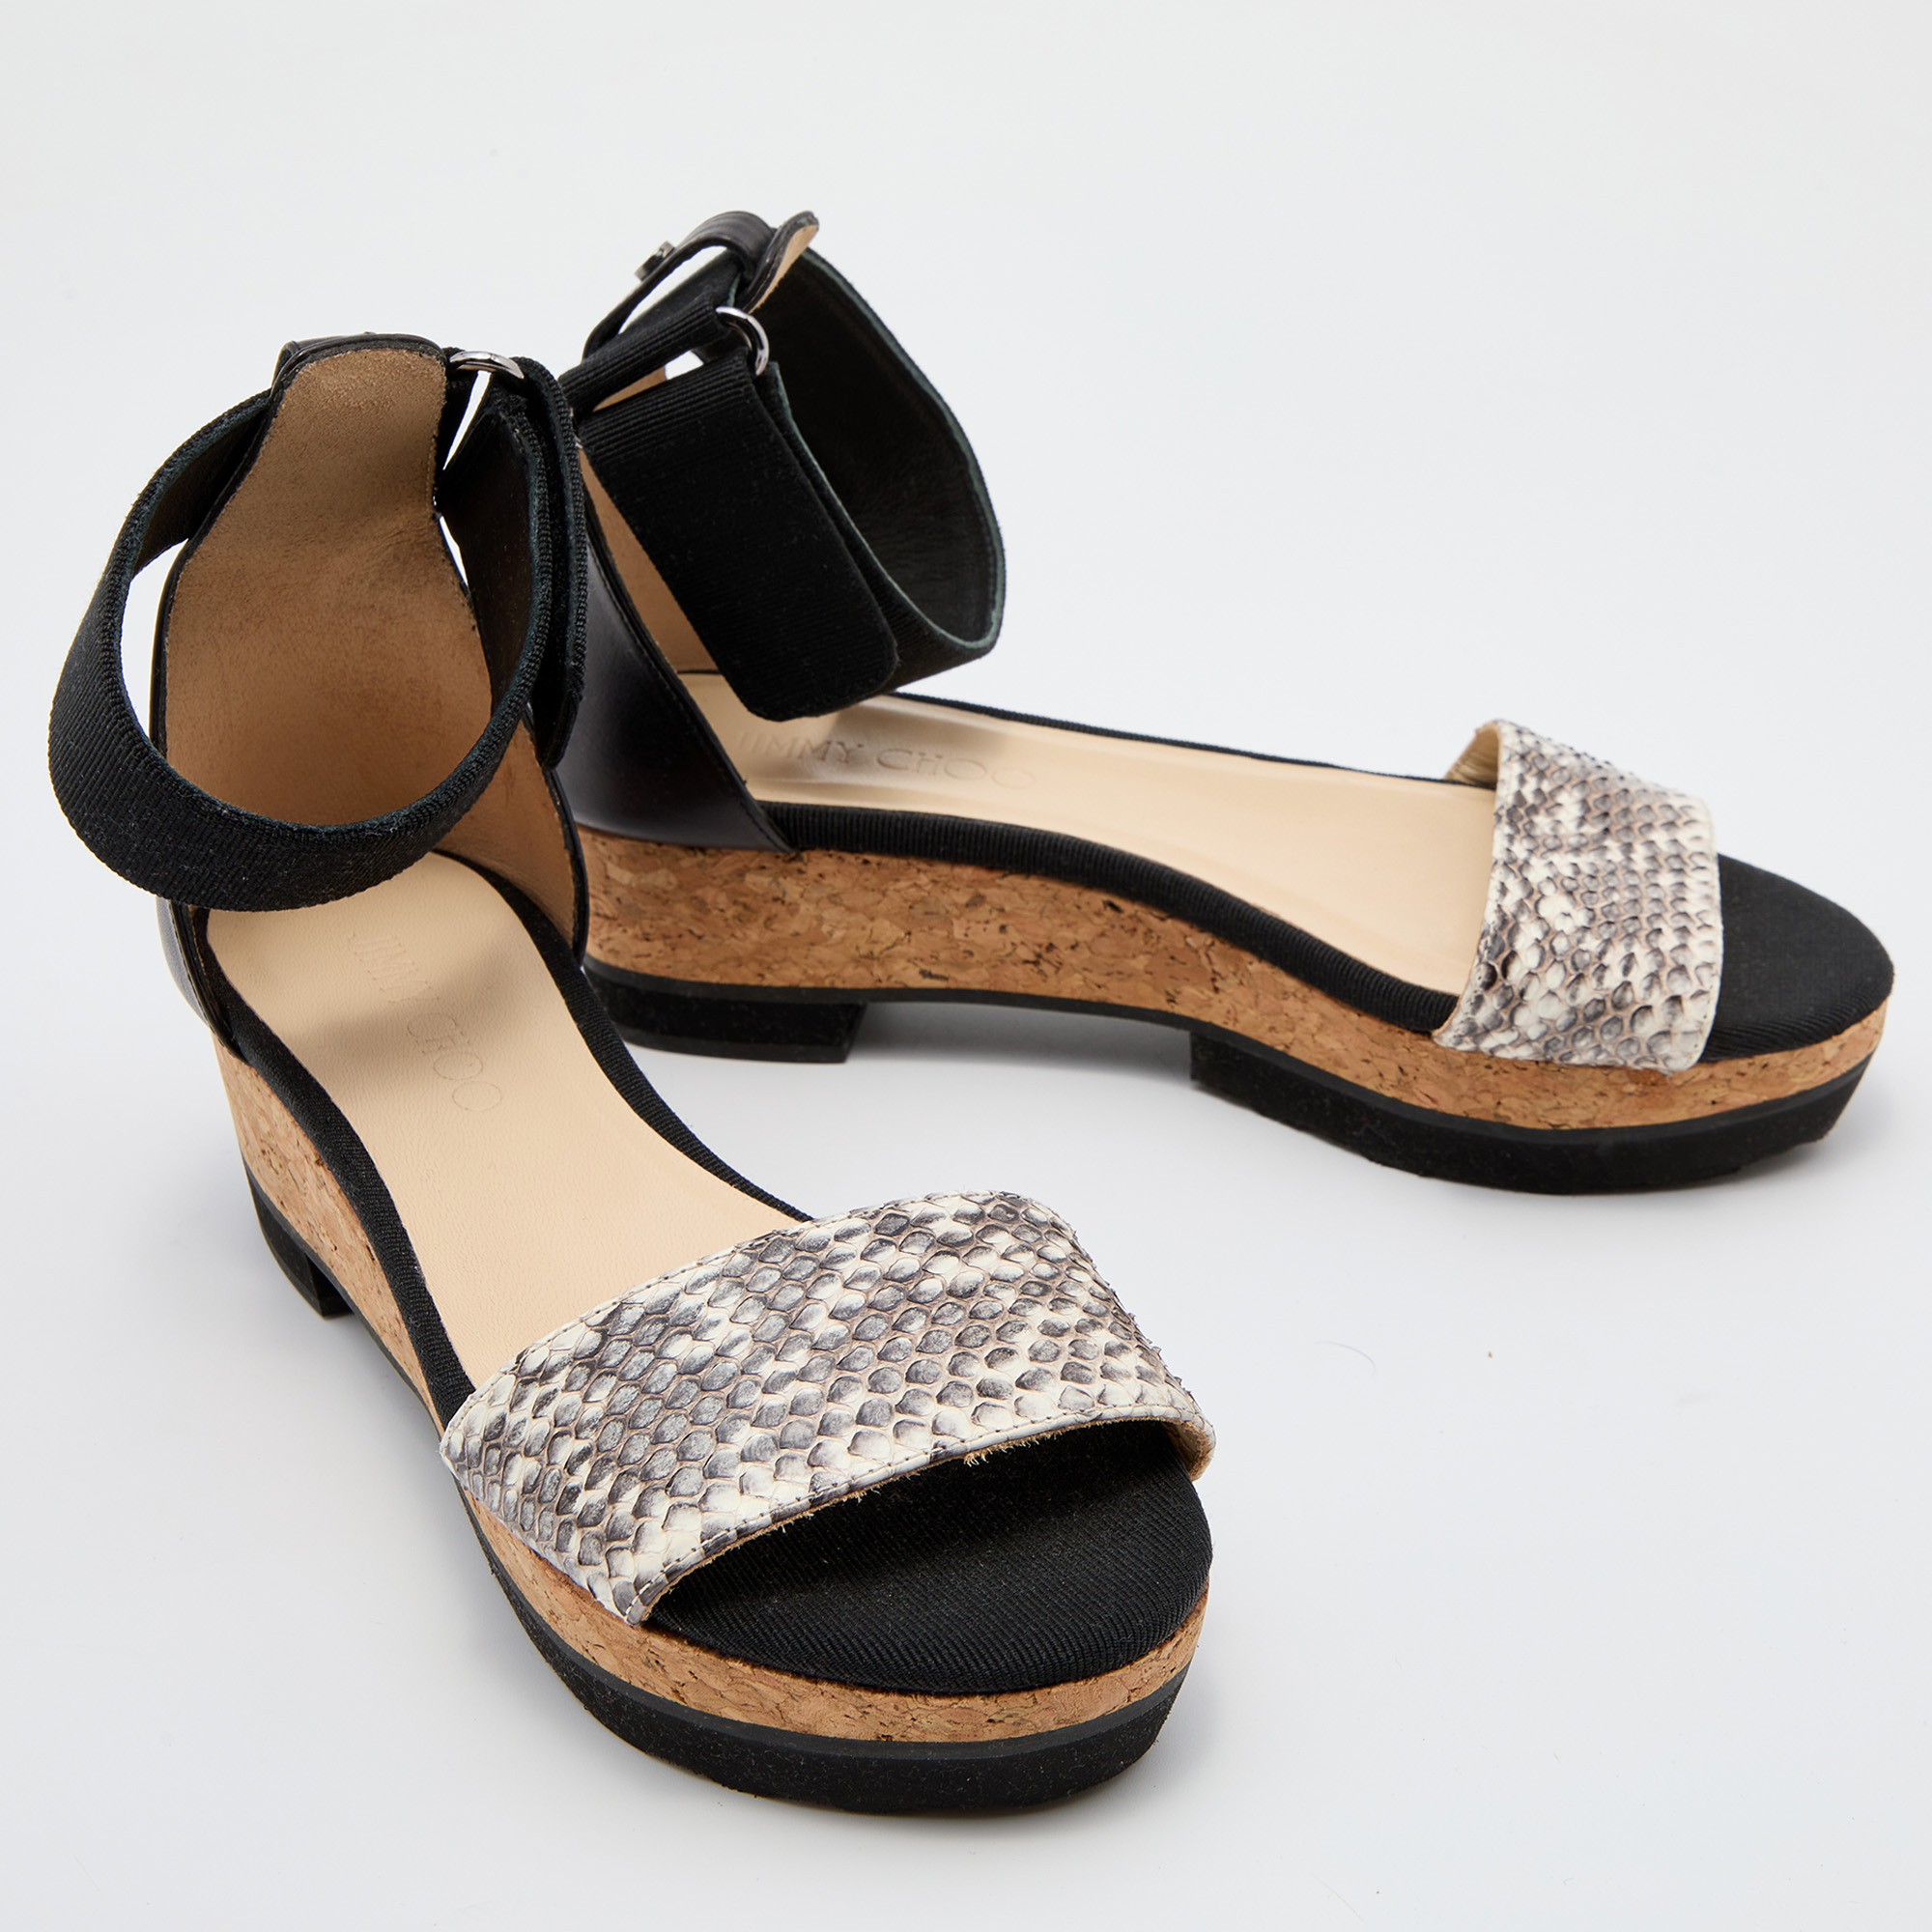 Jimmy Choo Black/Grey Snakeskin Leather Platform Ankle Strap Sandals Size 36